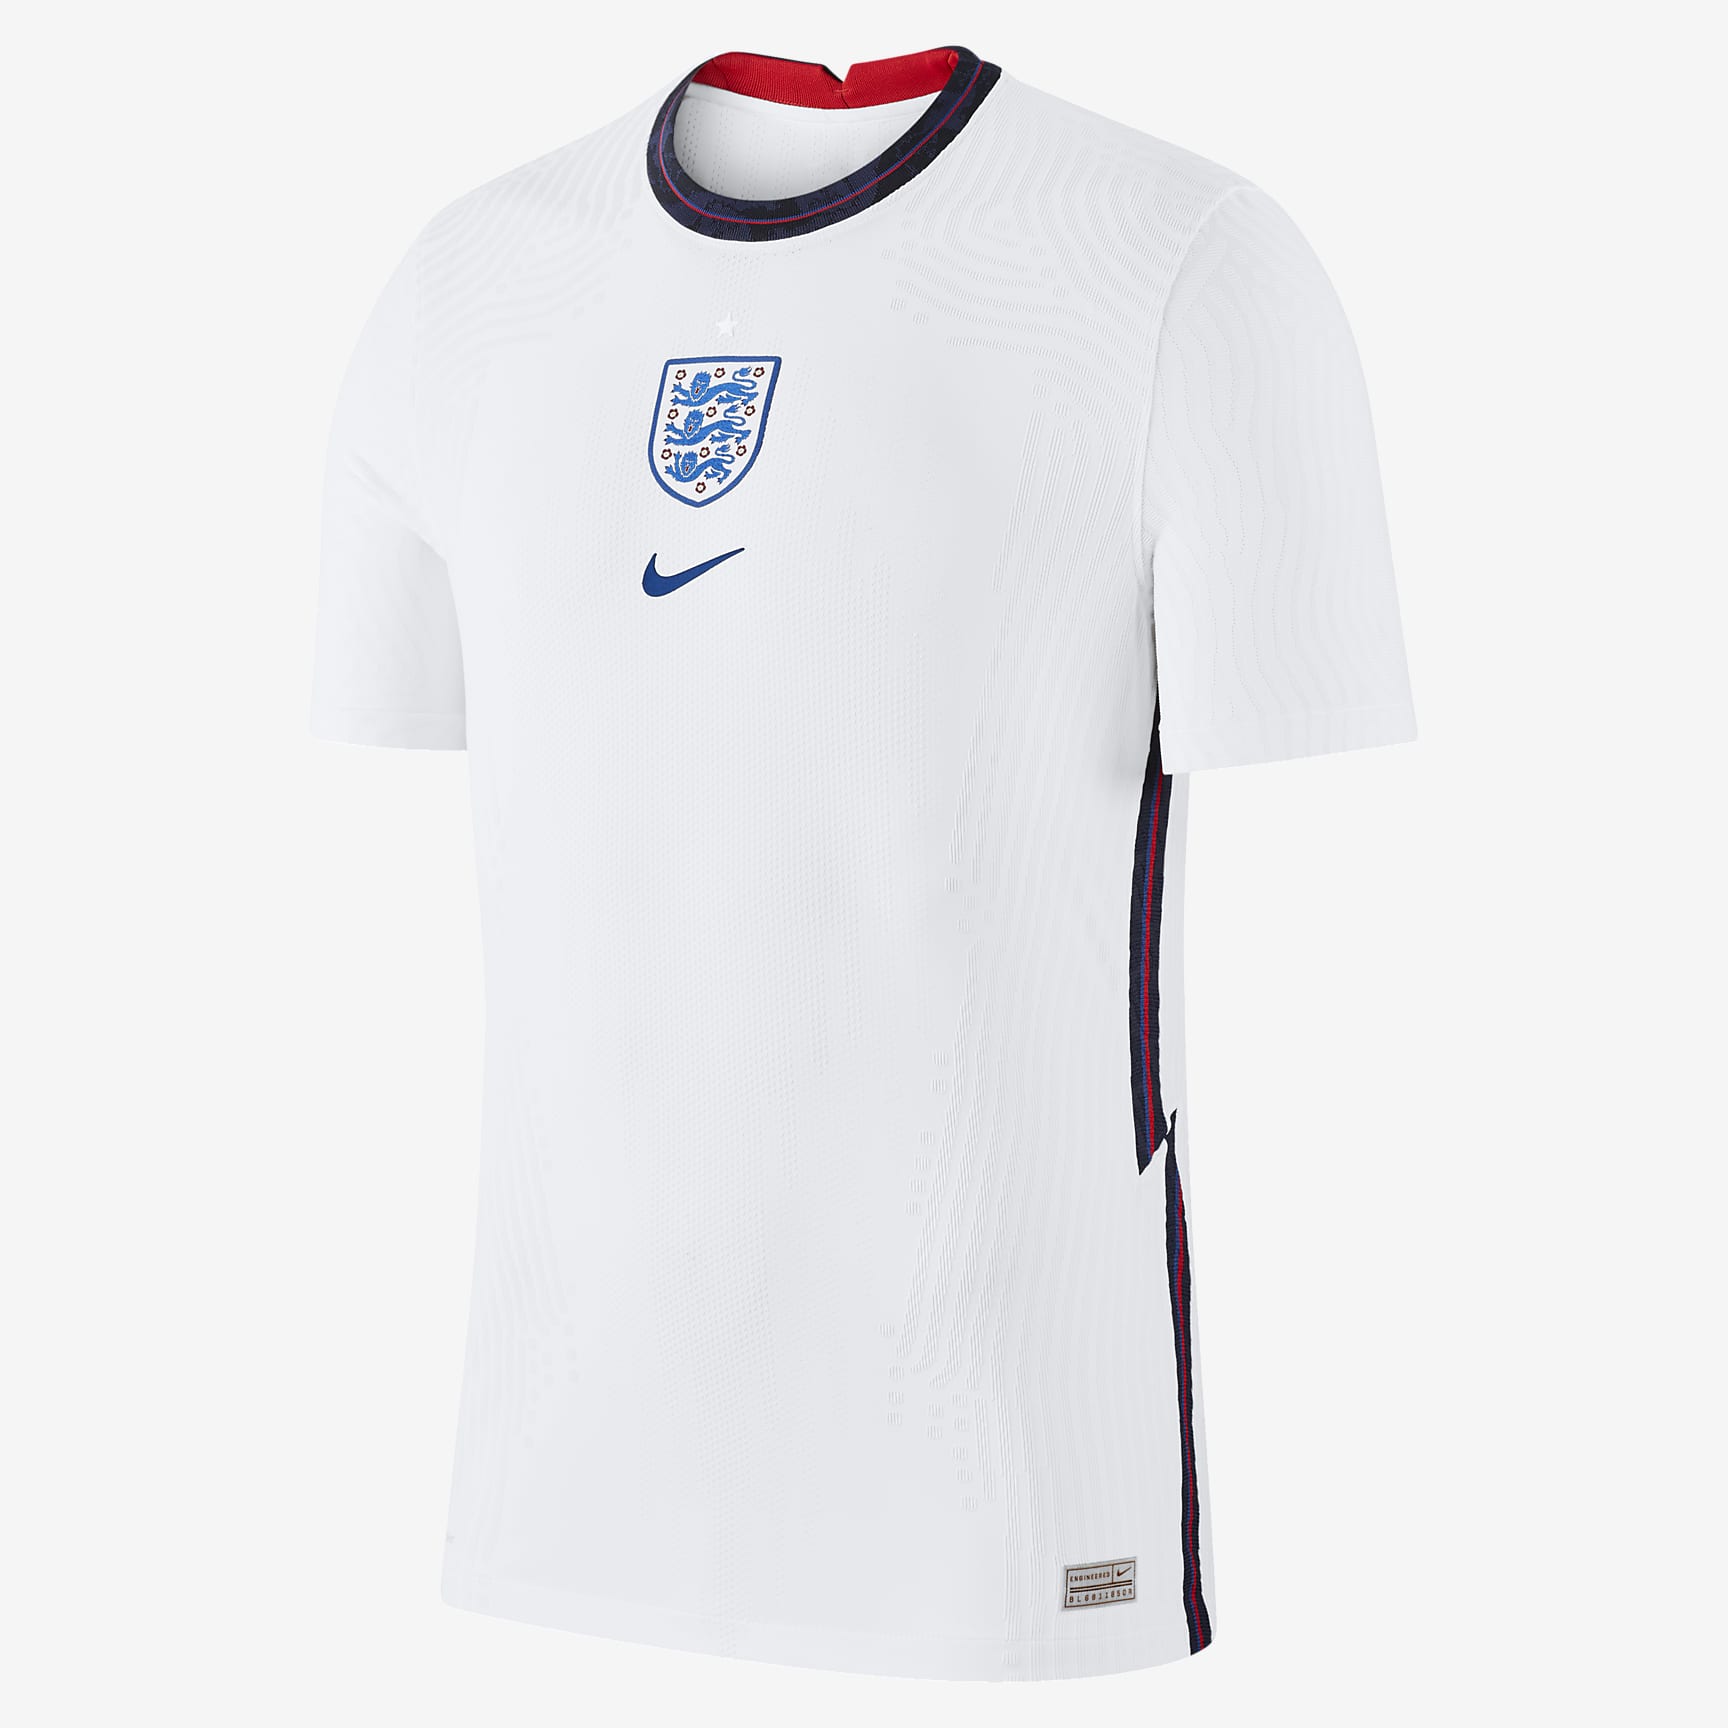 england-2020-vapor-match-home-football-shirt-nV36Cc.png